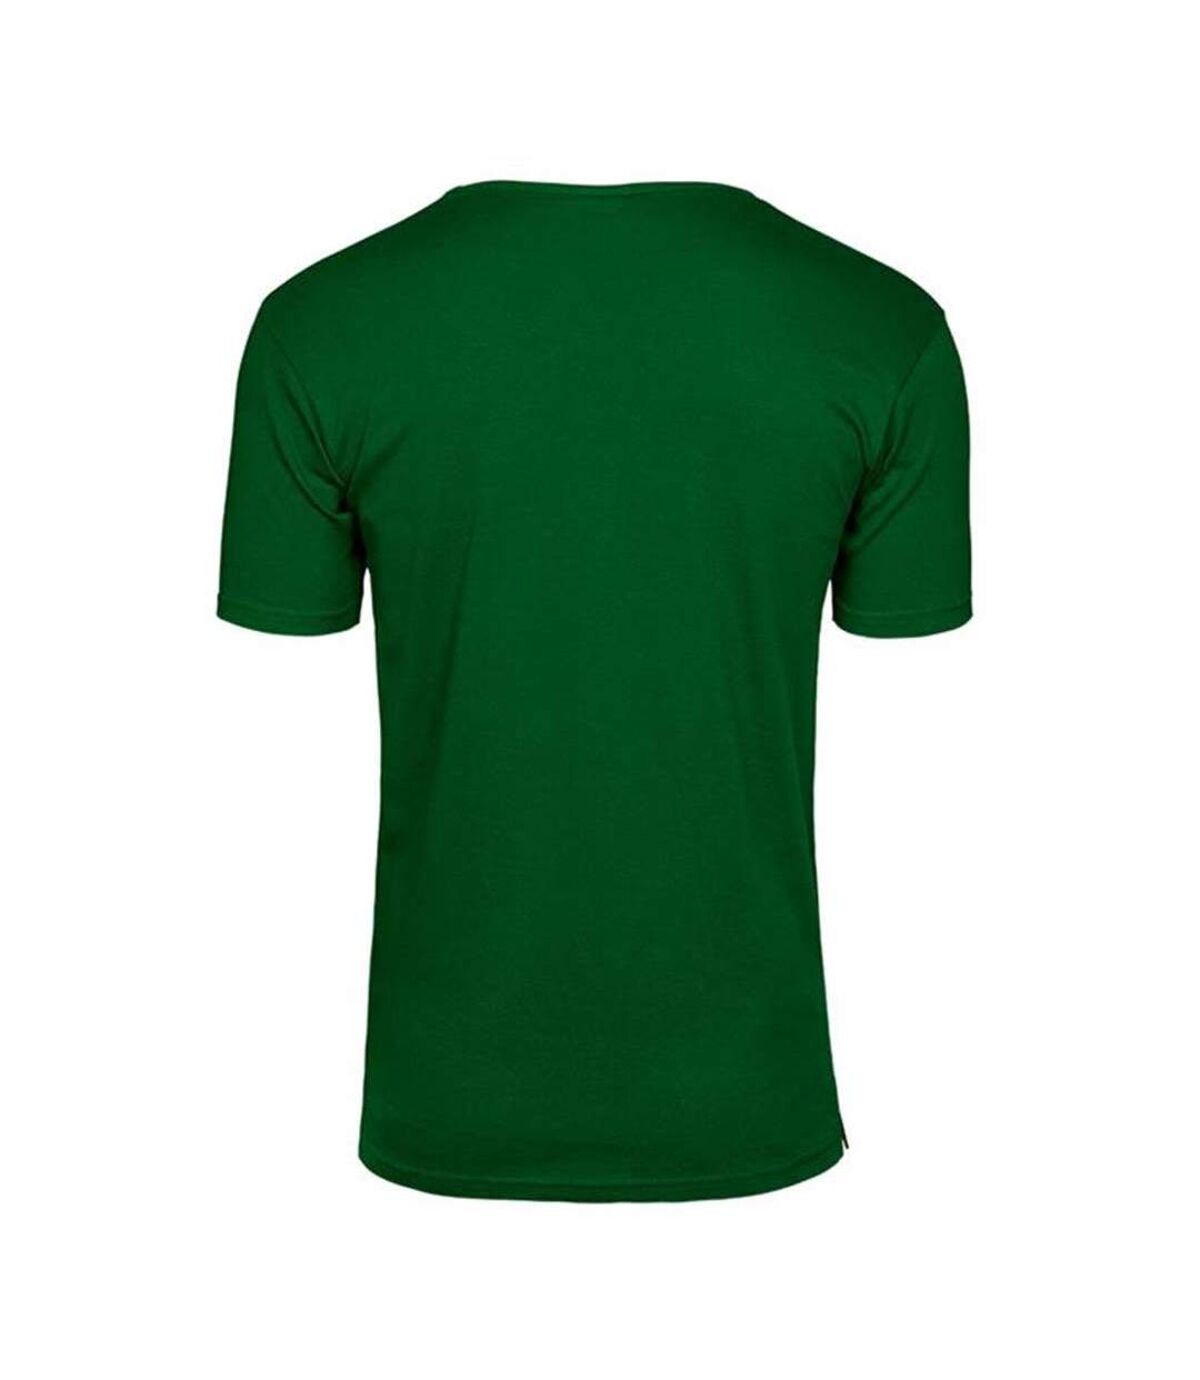 Tee Jays - T-shirt à manches courtes - Homme (Vert forêt) - UTBC3311